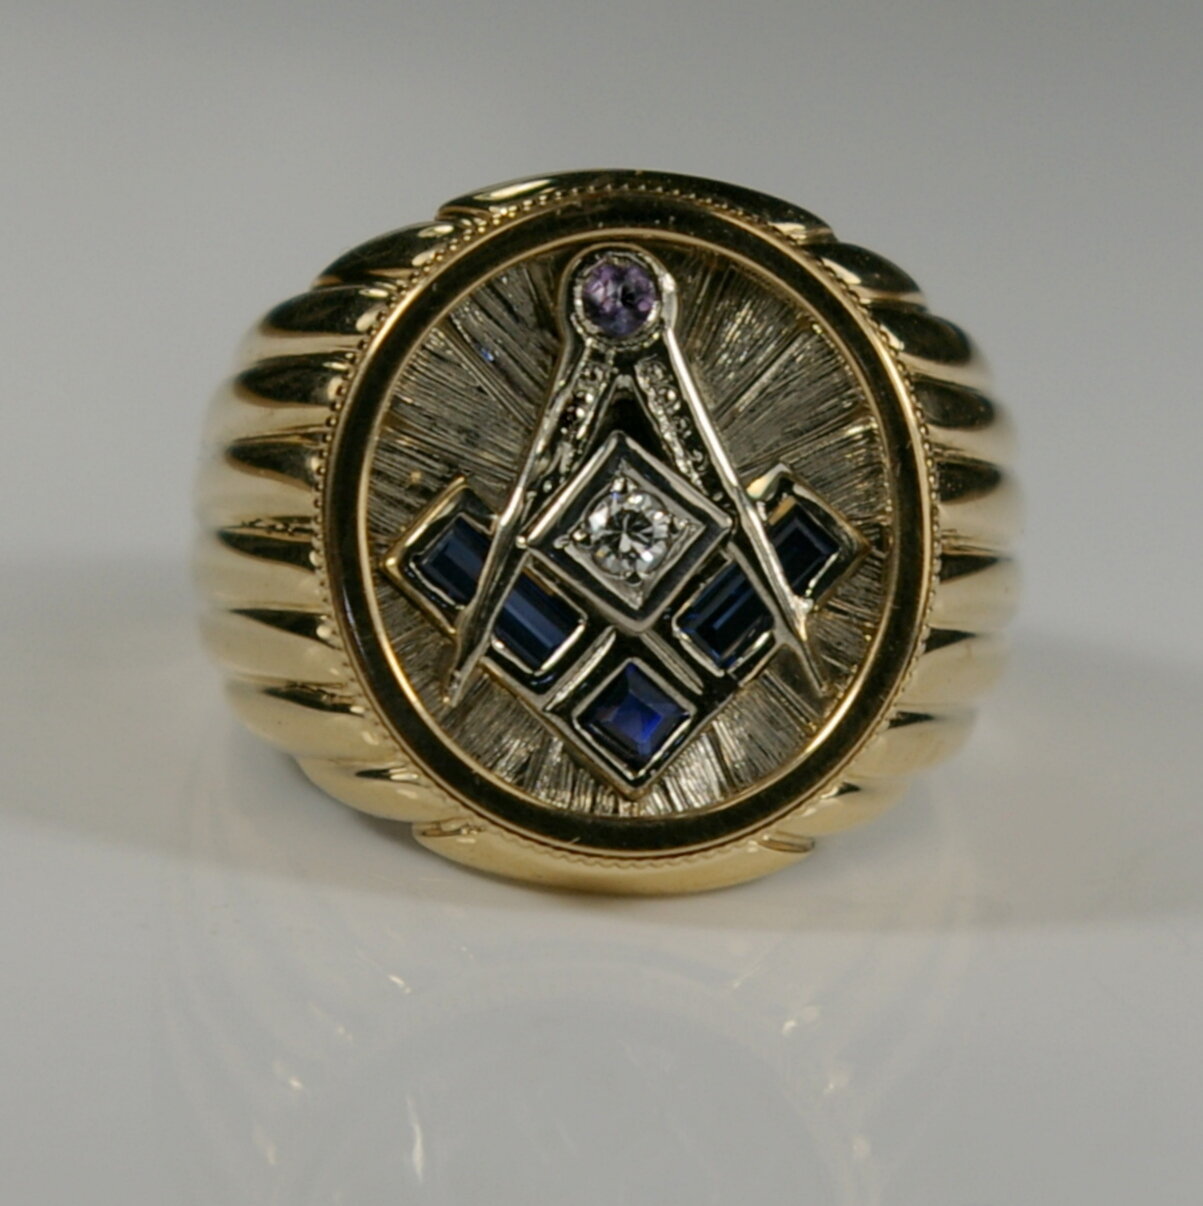 Masonic ring after restoration at Crane Jewelers Ltd. in 2019.JPG